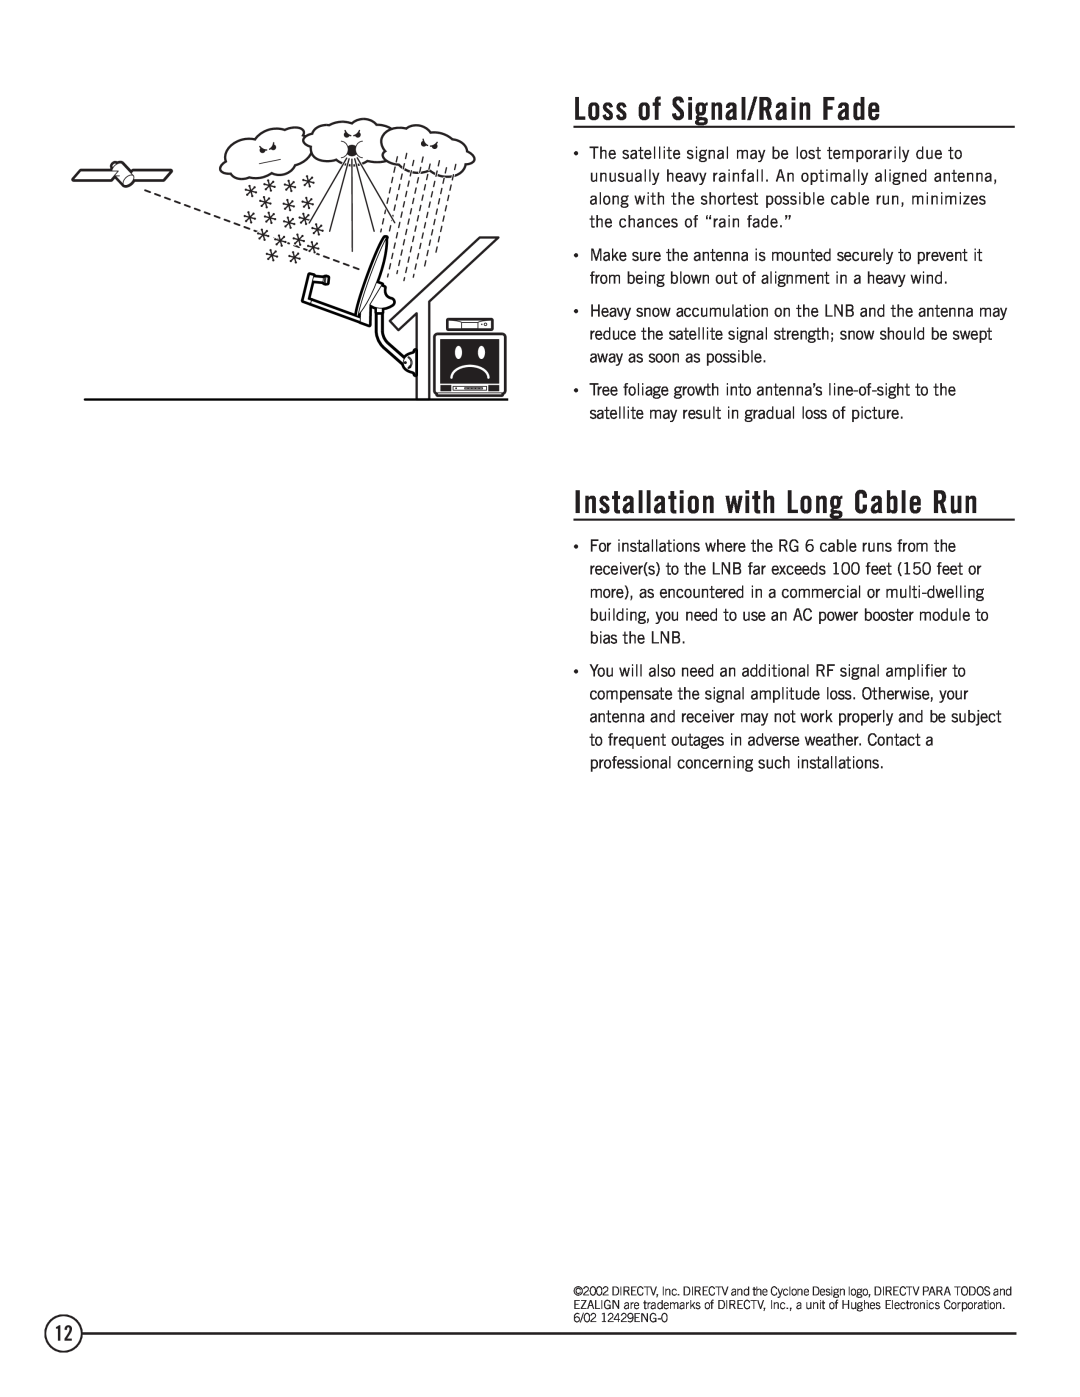 TERK Technologies 1DIRECTV installation manual Loss of Signal/Rain Fade, Installation with Long Cable Run 